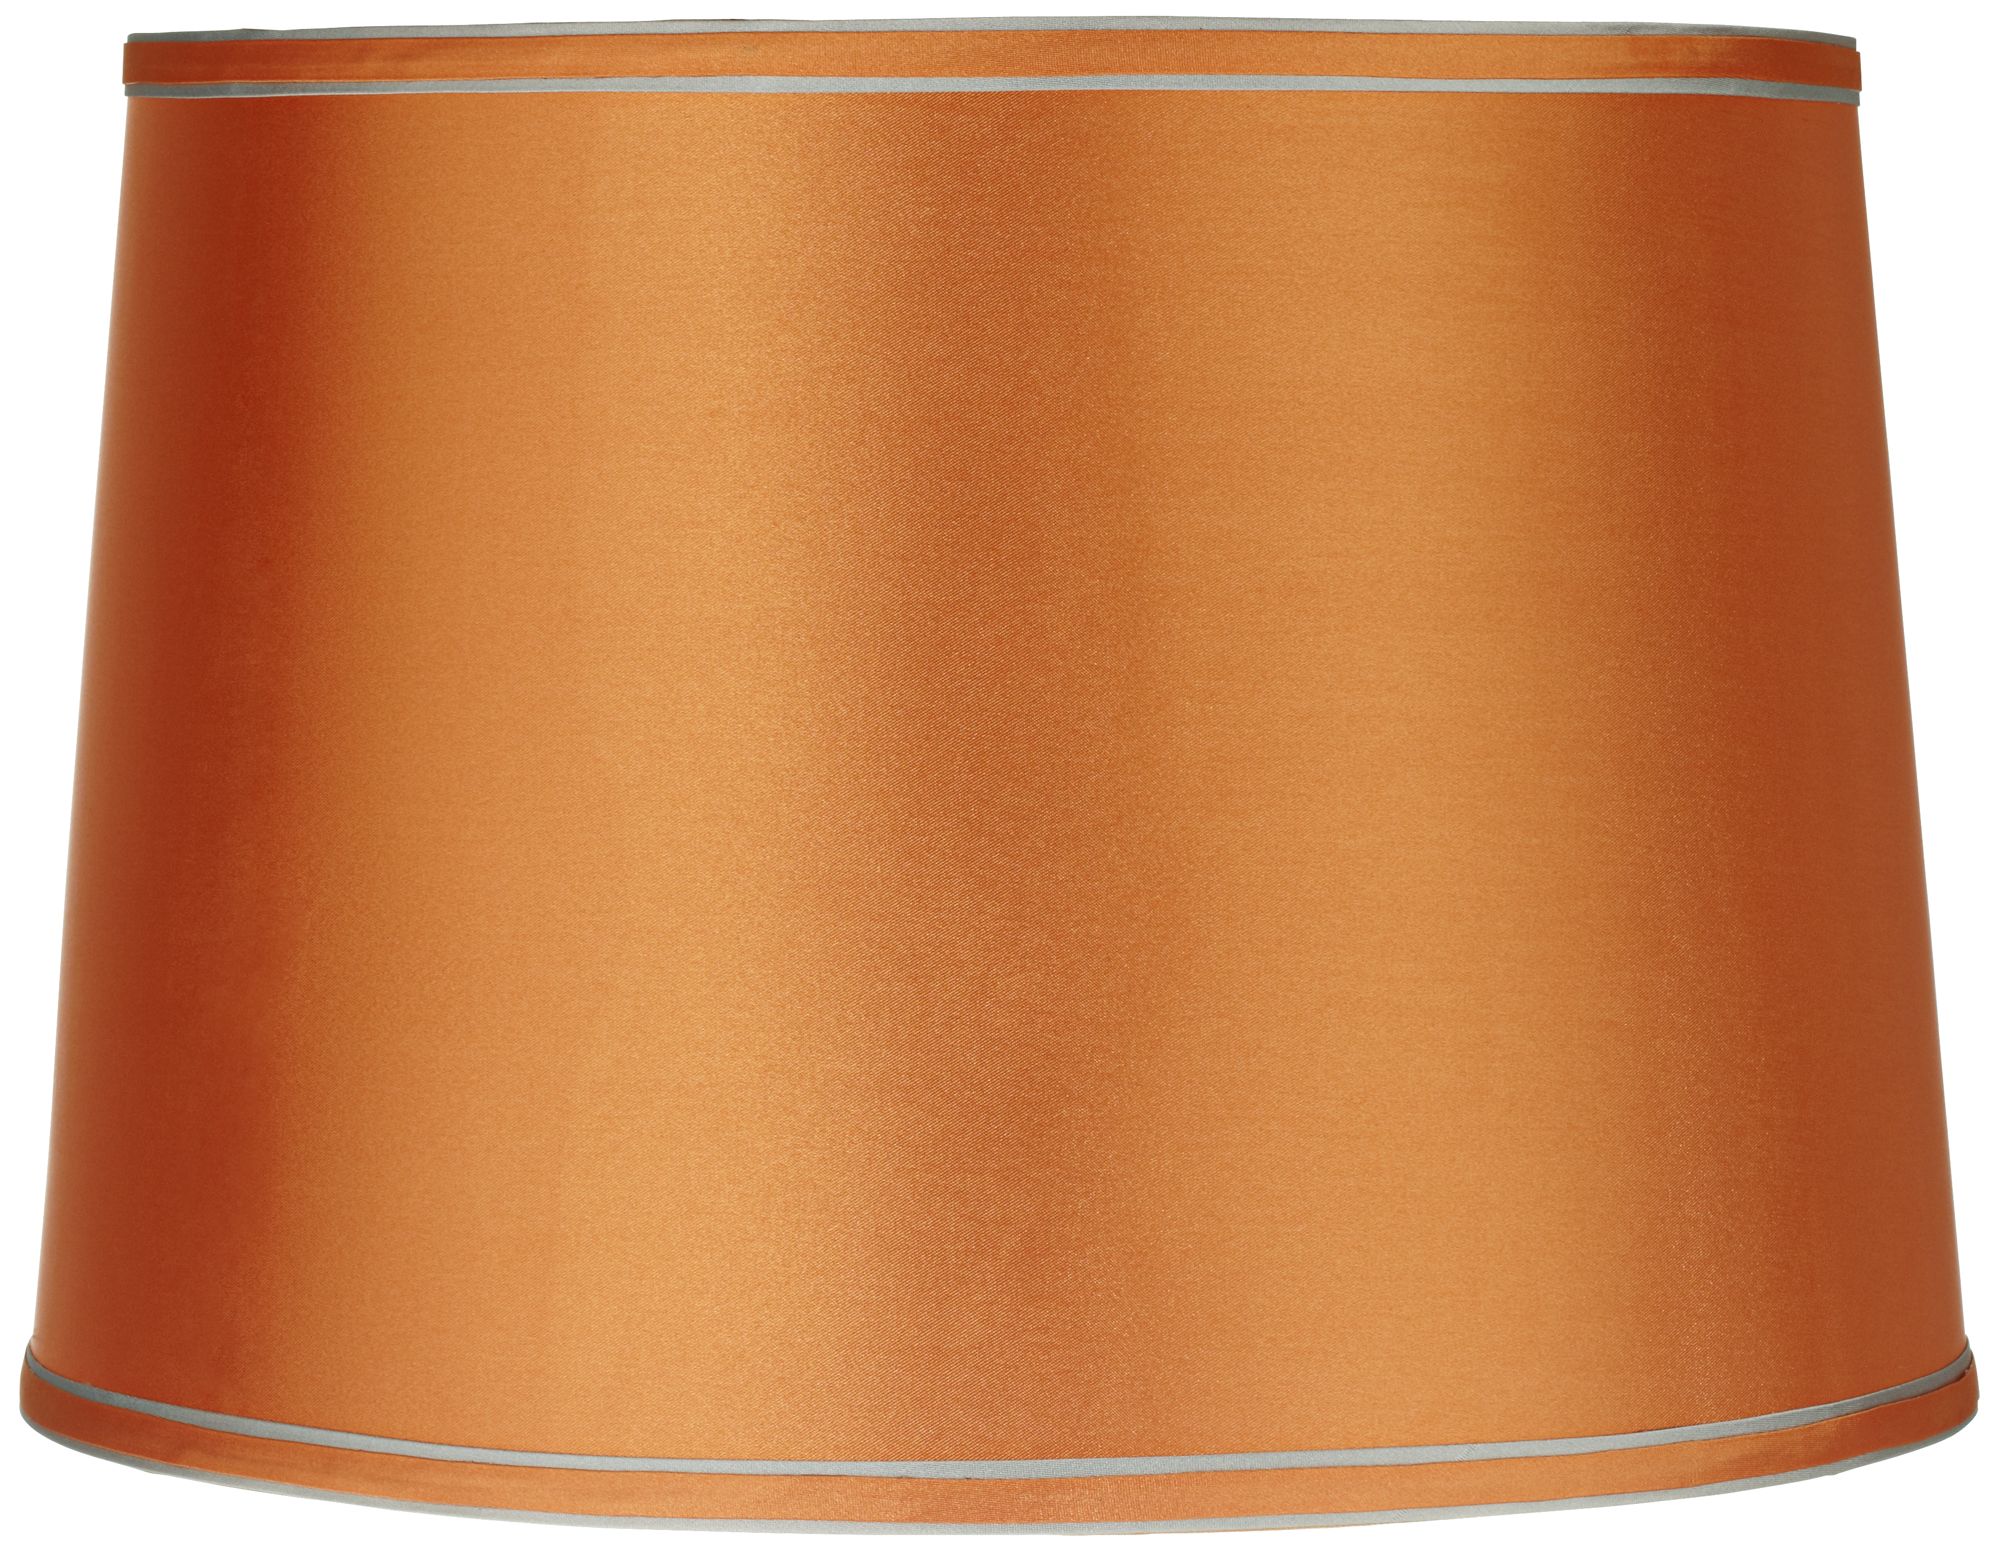 orange lamp shades table lamps